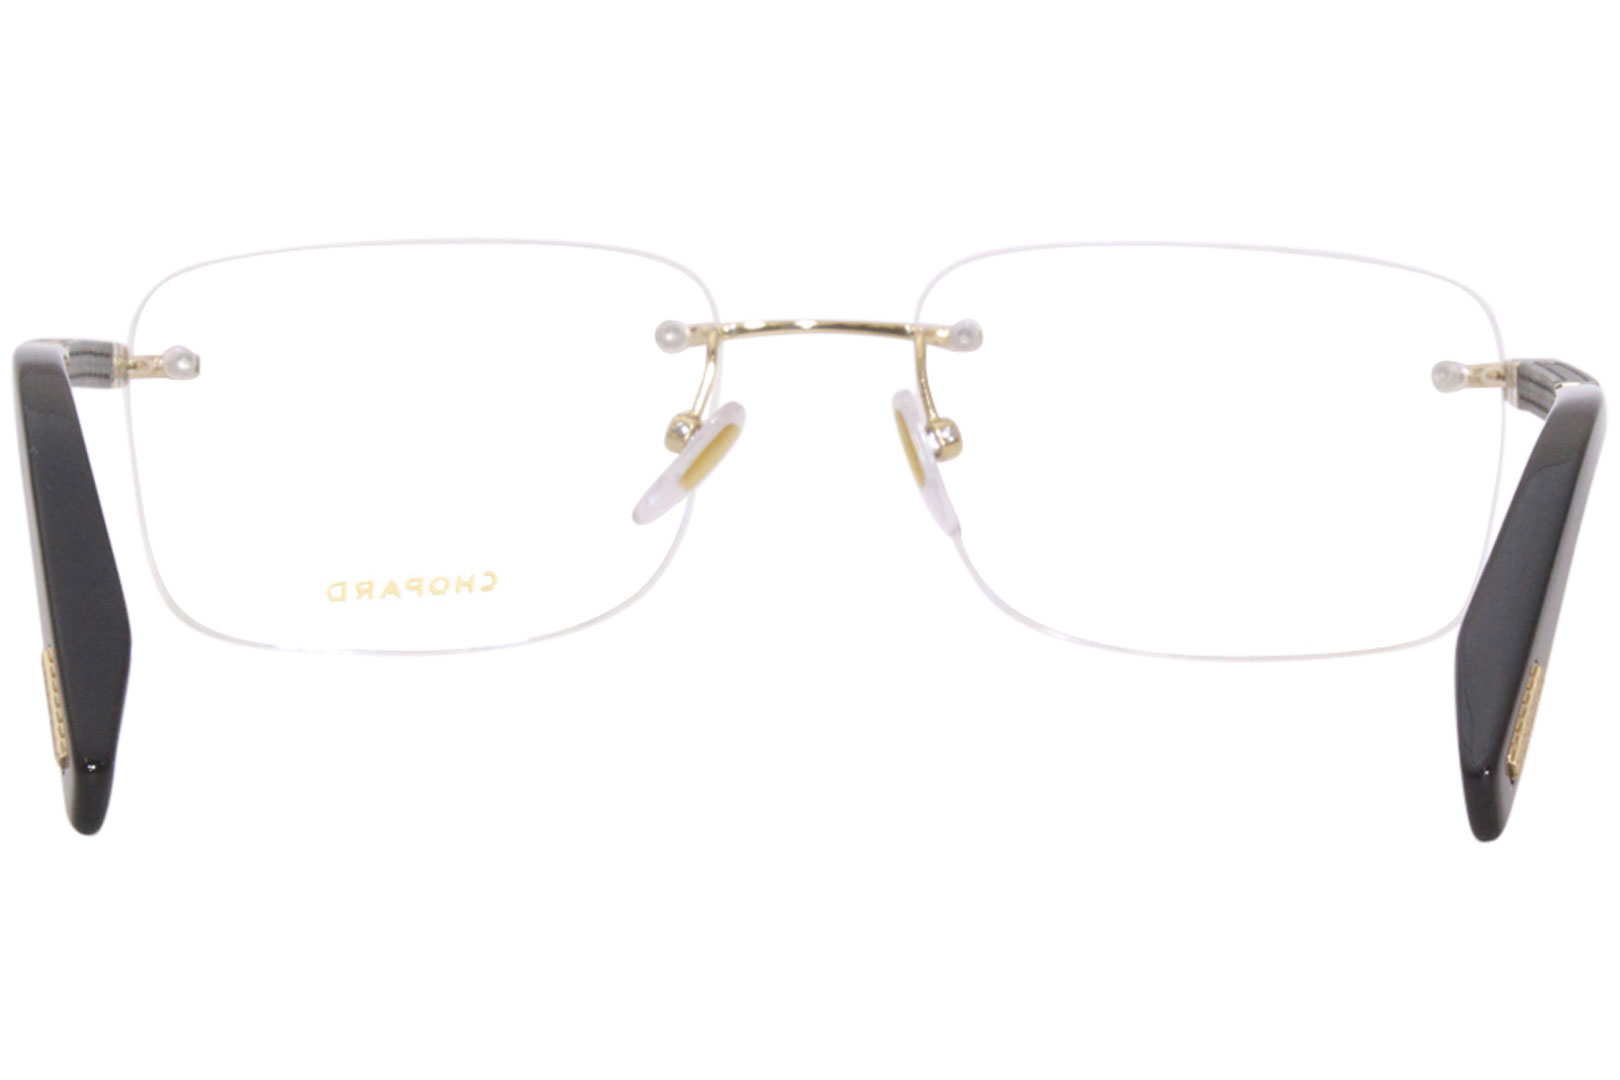 Chopard VCHF58 Eyeglasses Men's Rimless Rectangular Optical Frame ...